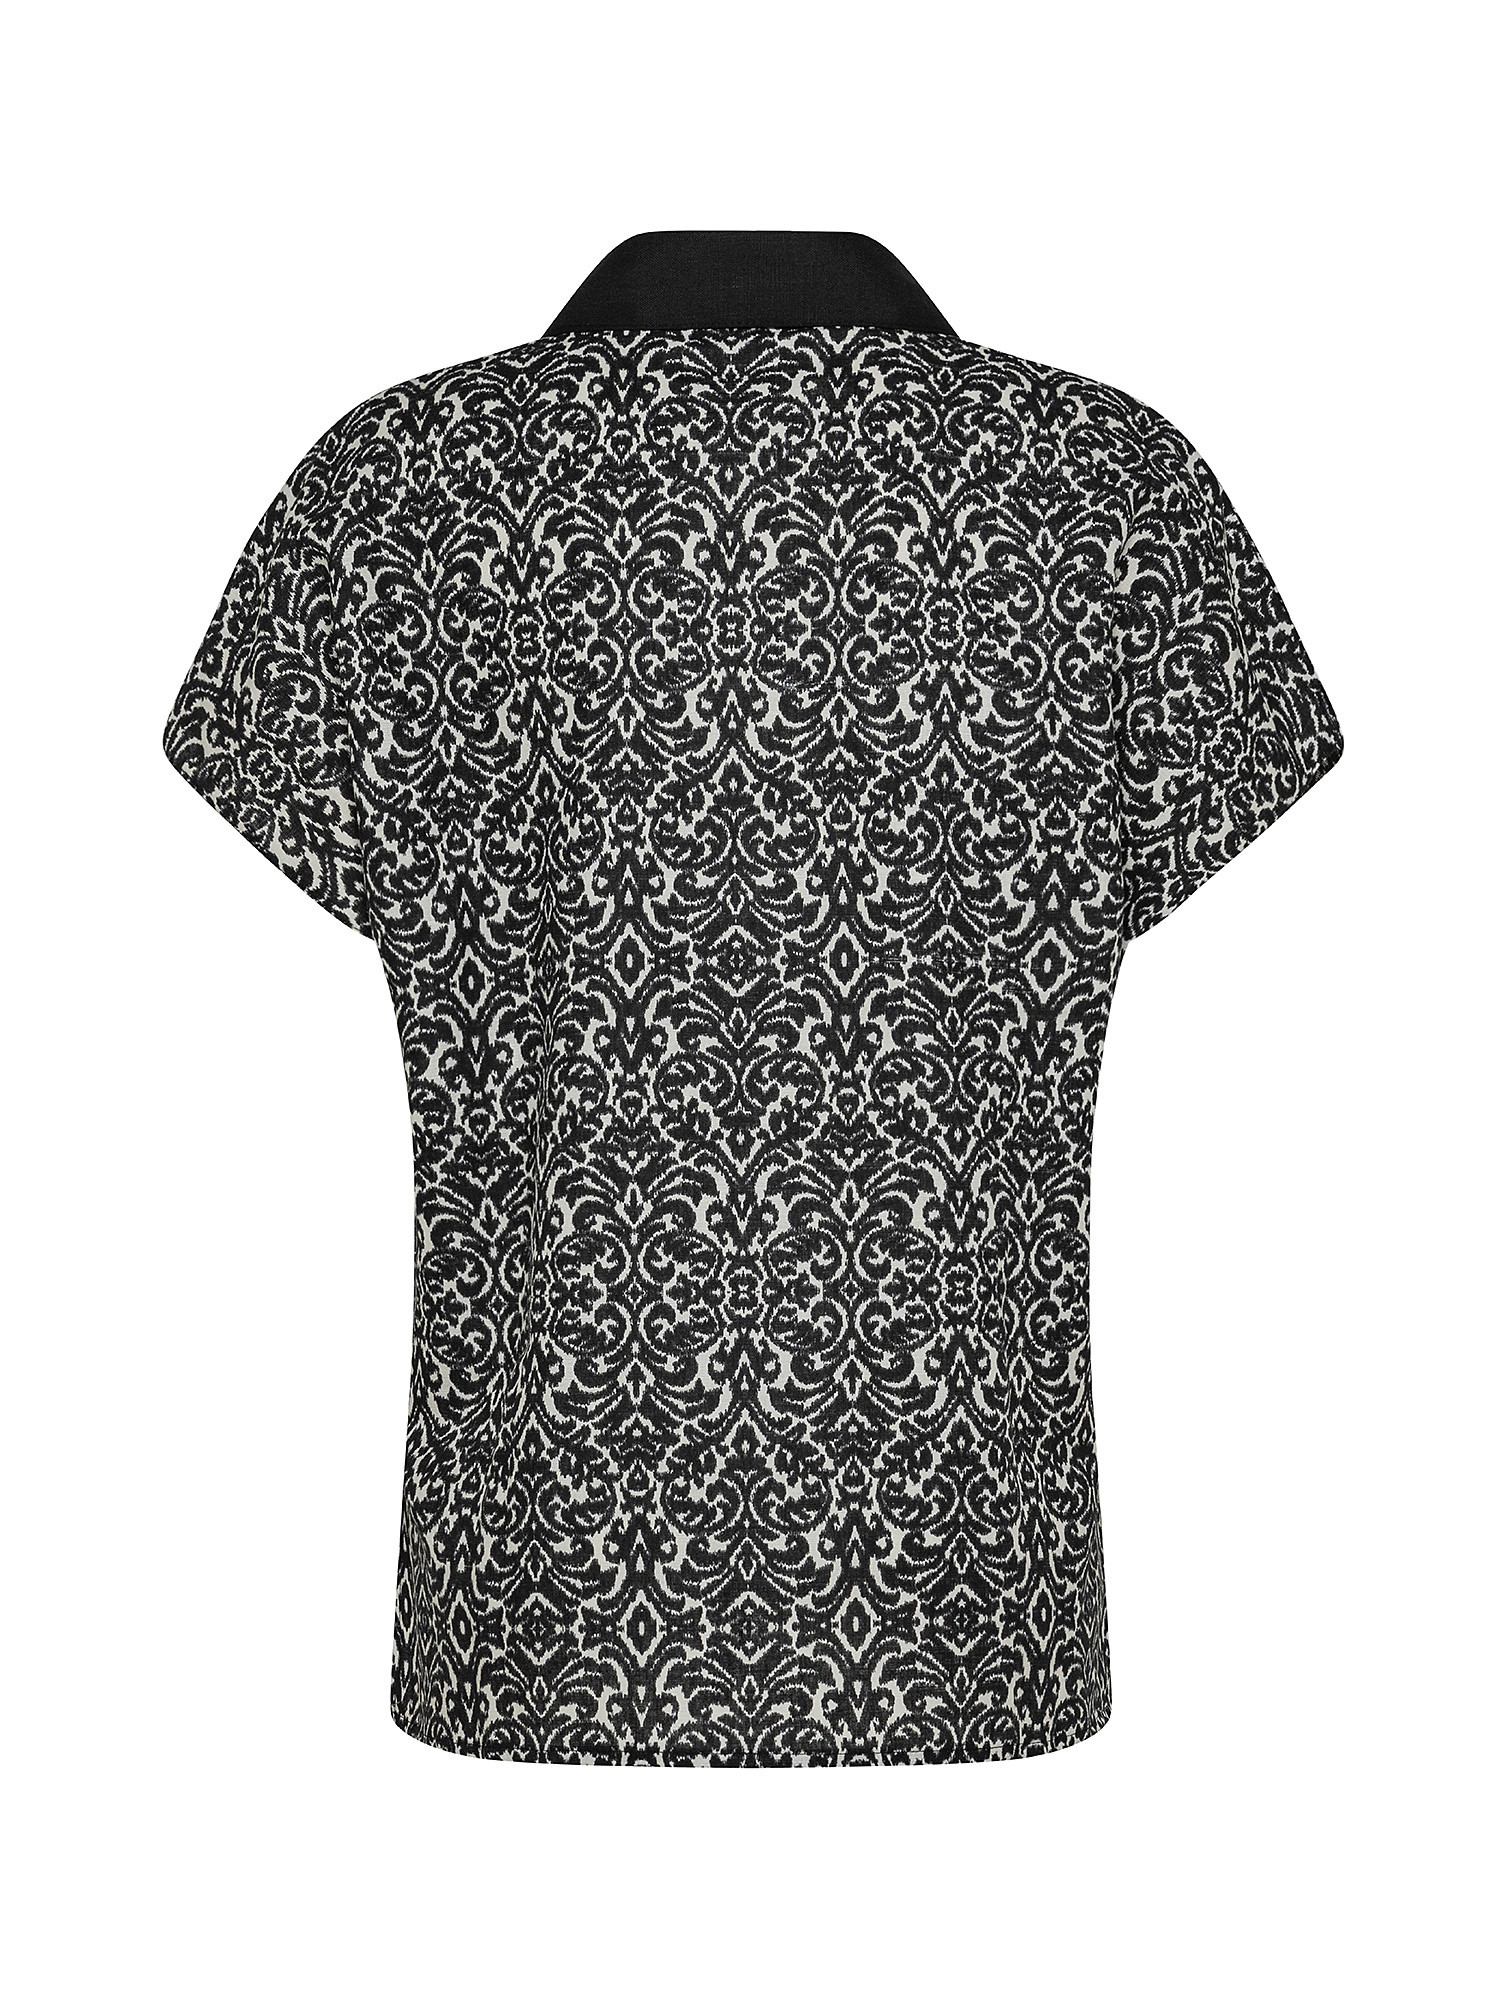 Patterned kimono shirt, Black, large image number 1